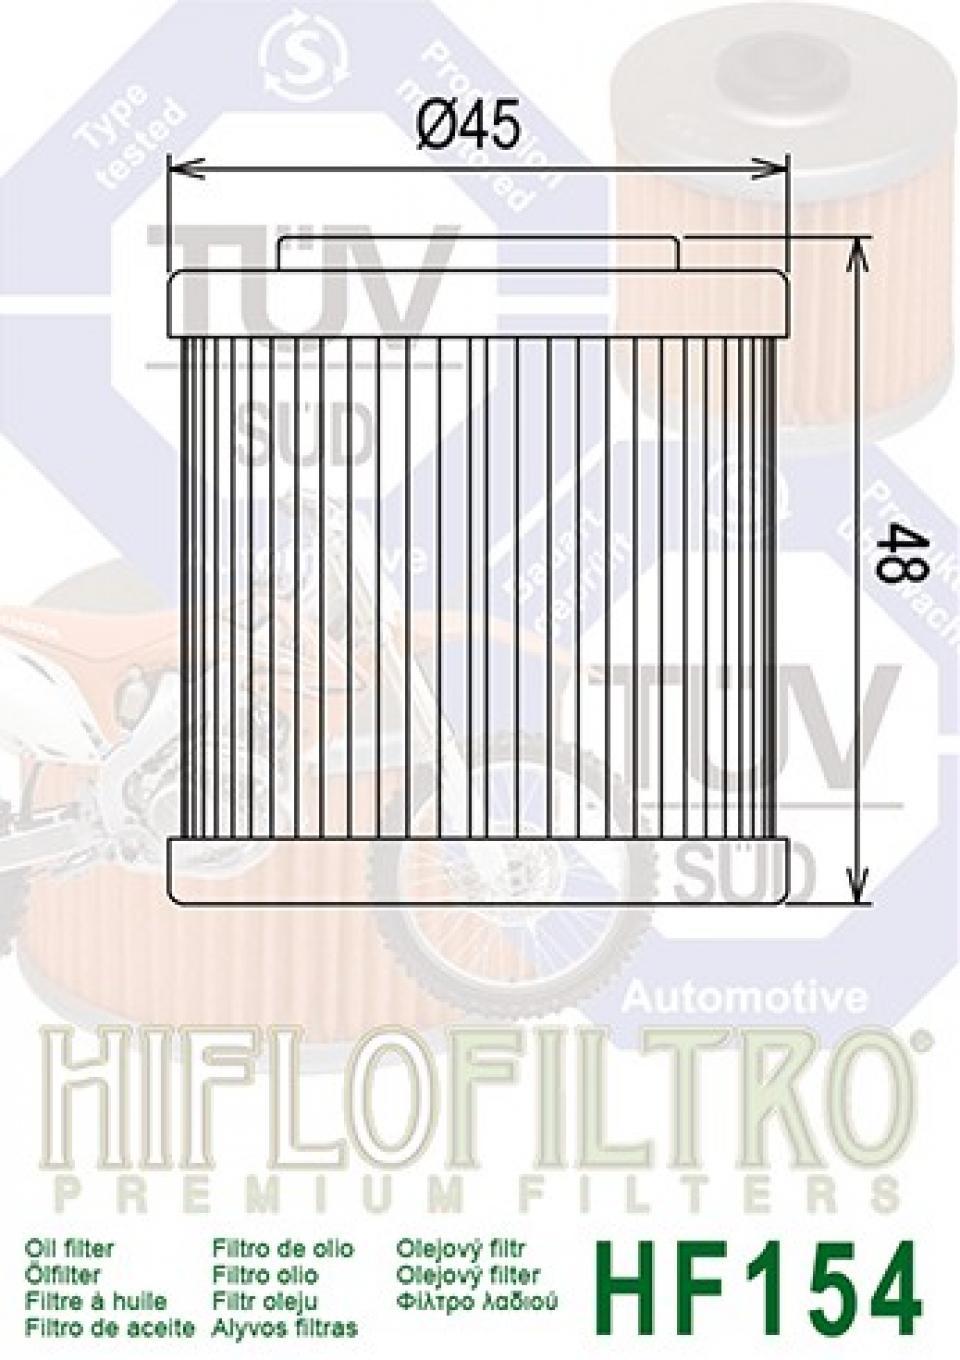 Filtre à huile Hiflo Filtro pour Moto Husqvarna 450 Tc 4T 2002-2007 Neuf